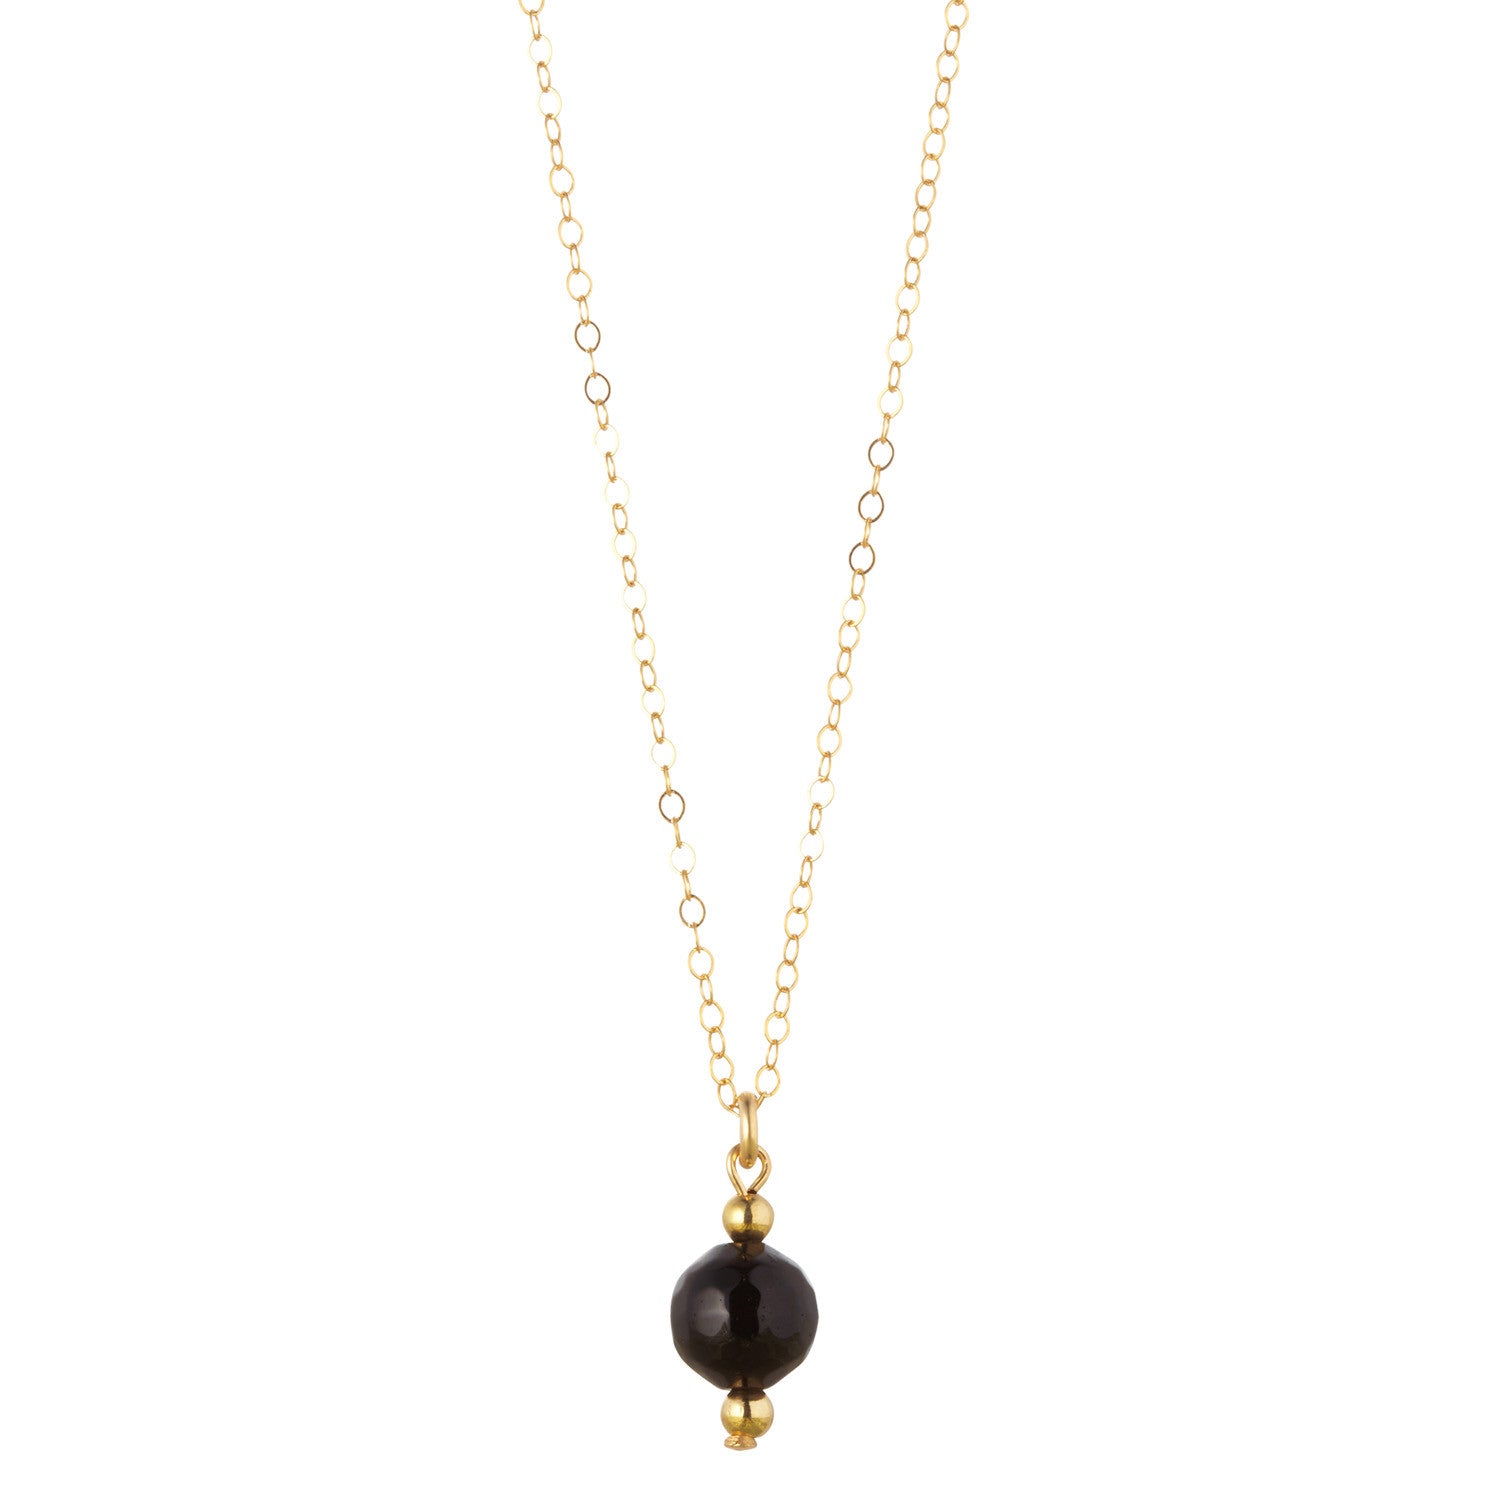 14kt Gold Filled Petite Black Onyx Necklace - MoMuse Jewellery